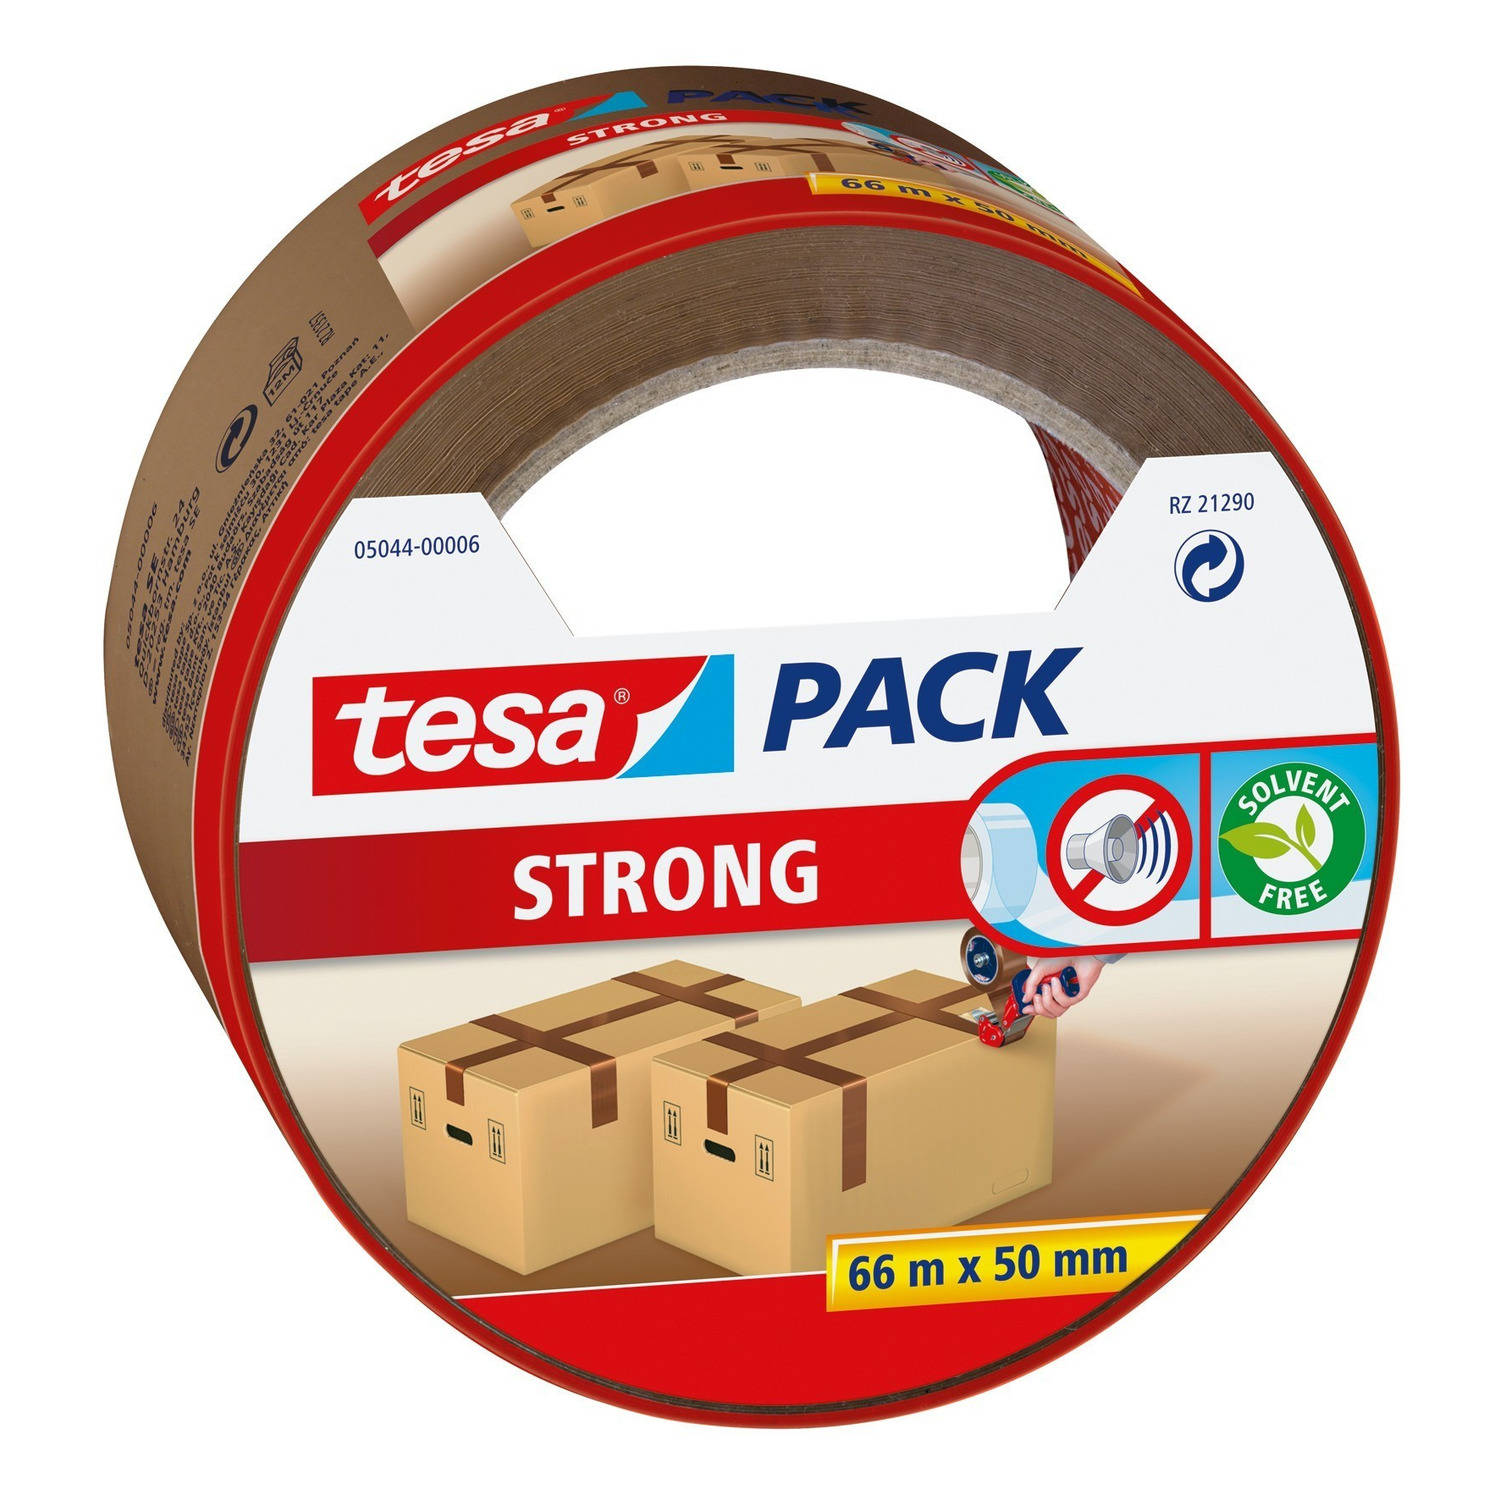 3x Tesa bruine verpakkingstape 66 mtr x 50 mm Tape (klussen)